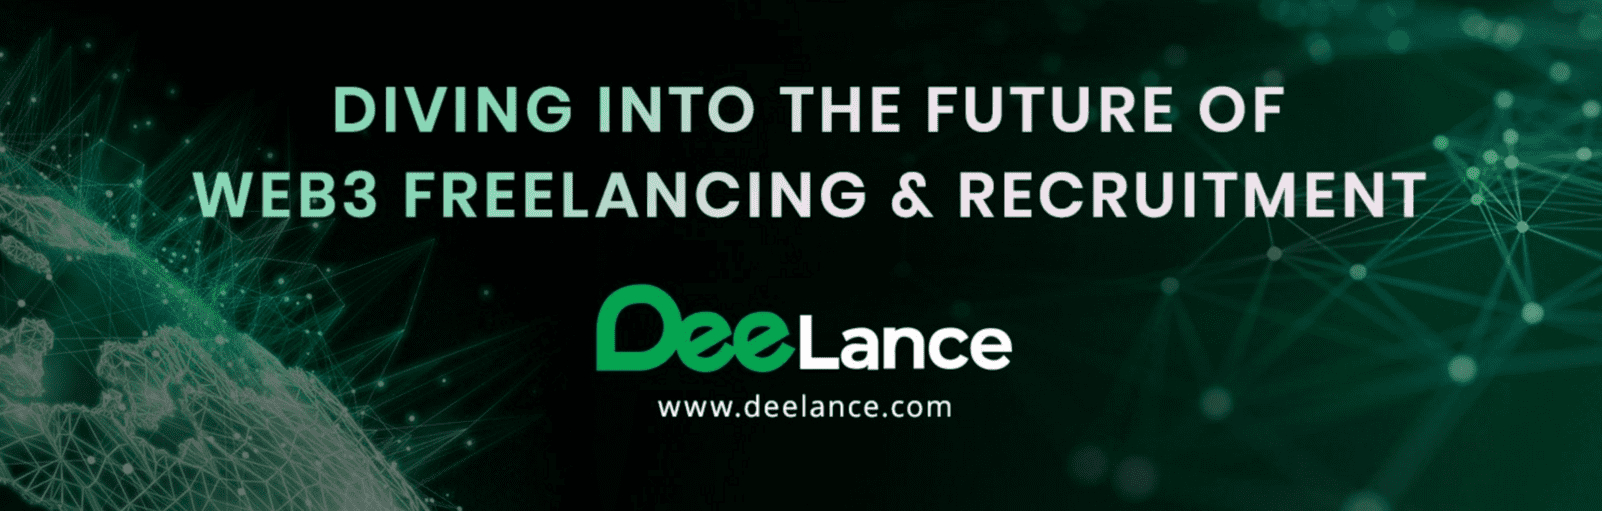 DeeLance Price Prediction 2023-2030